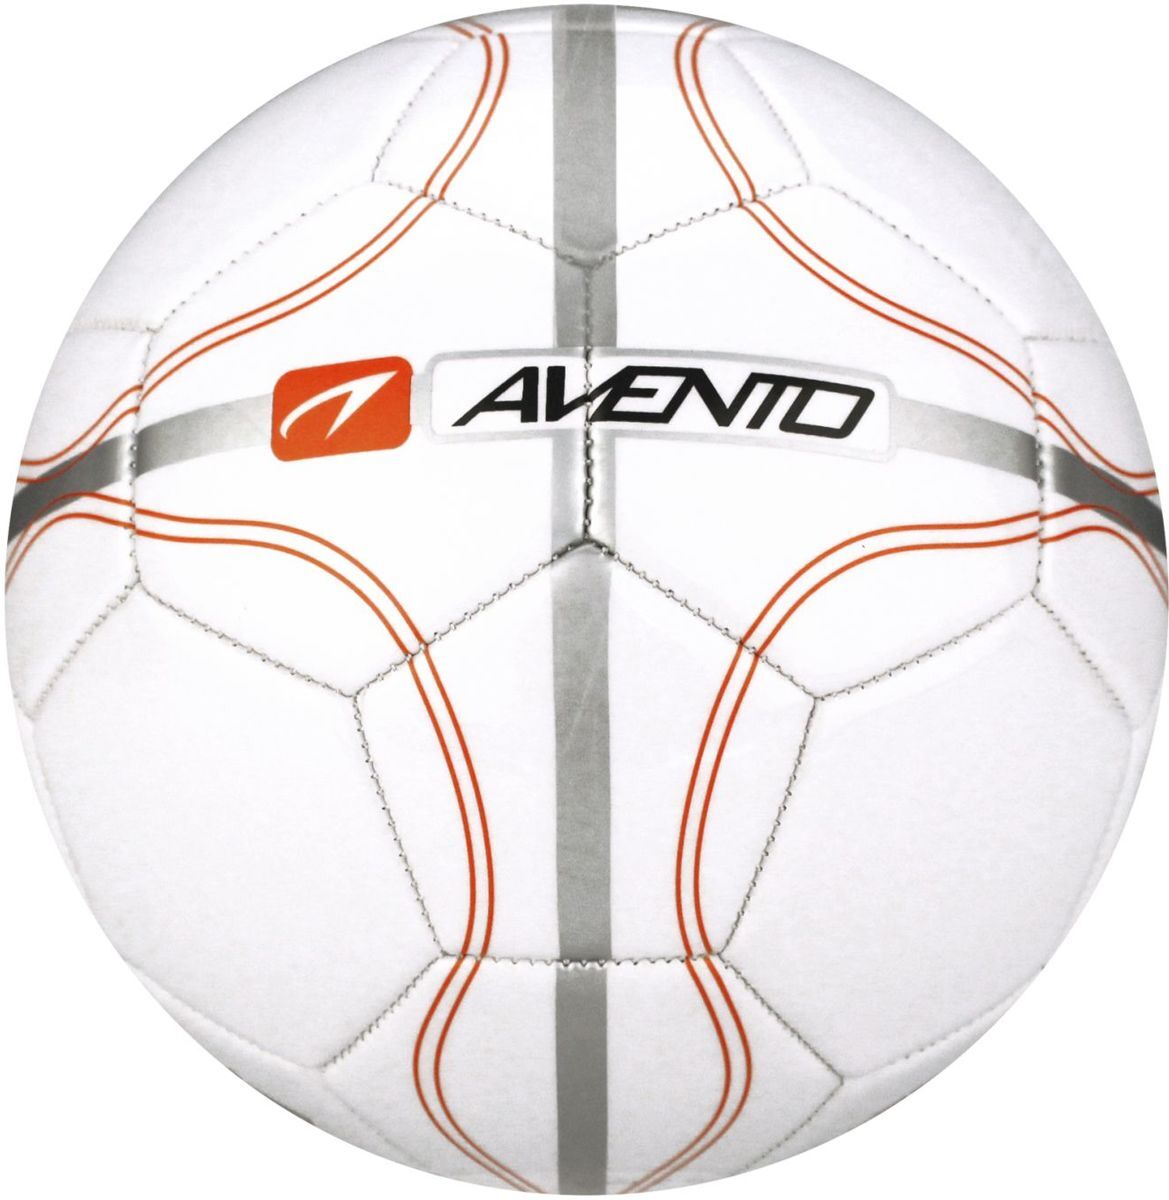 Avento Voetbal Glossy PVC - League Defender - Wit/Oranje/Zilver - 5